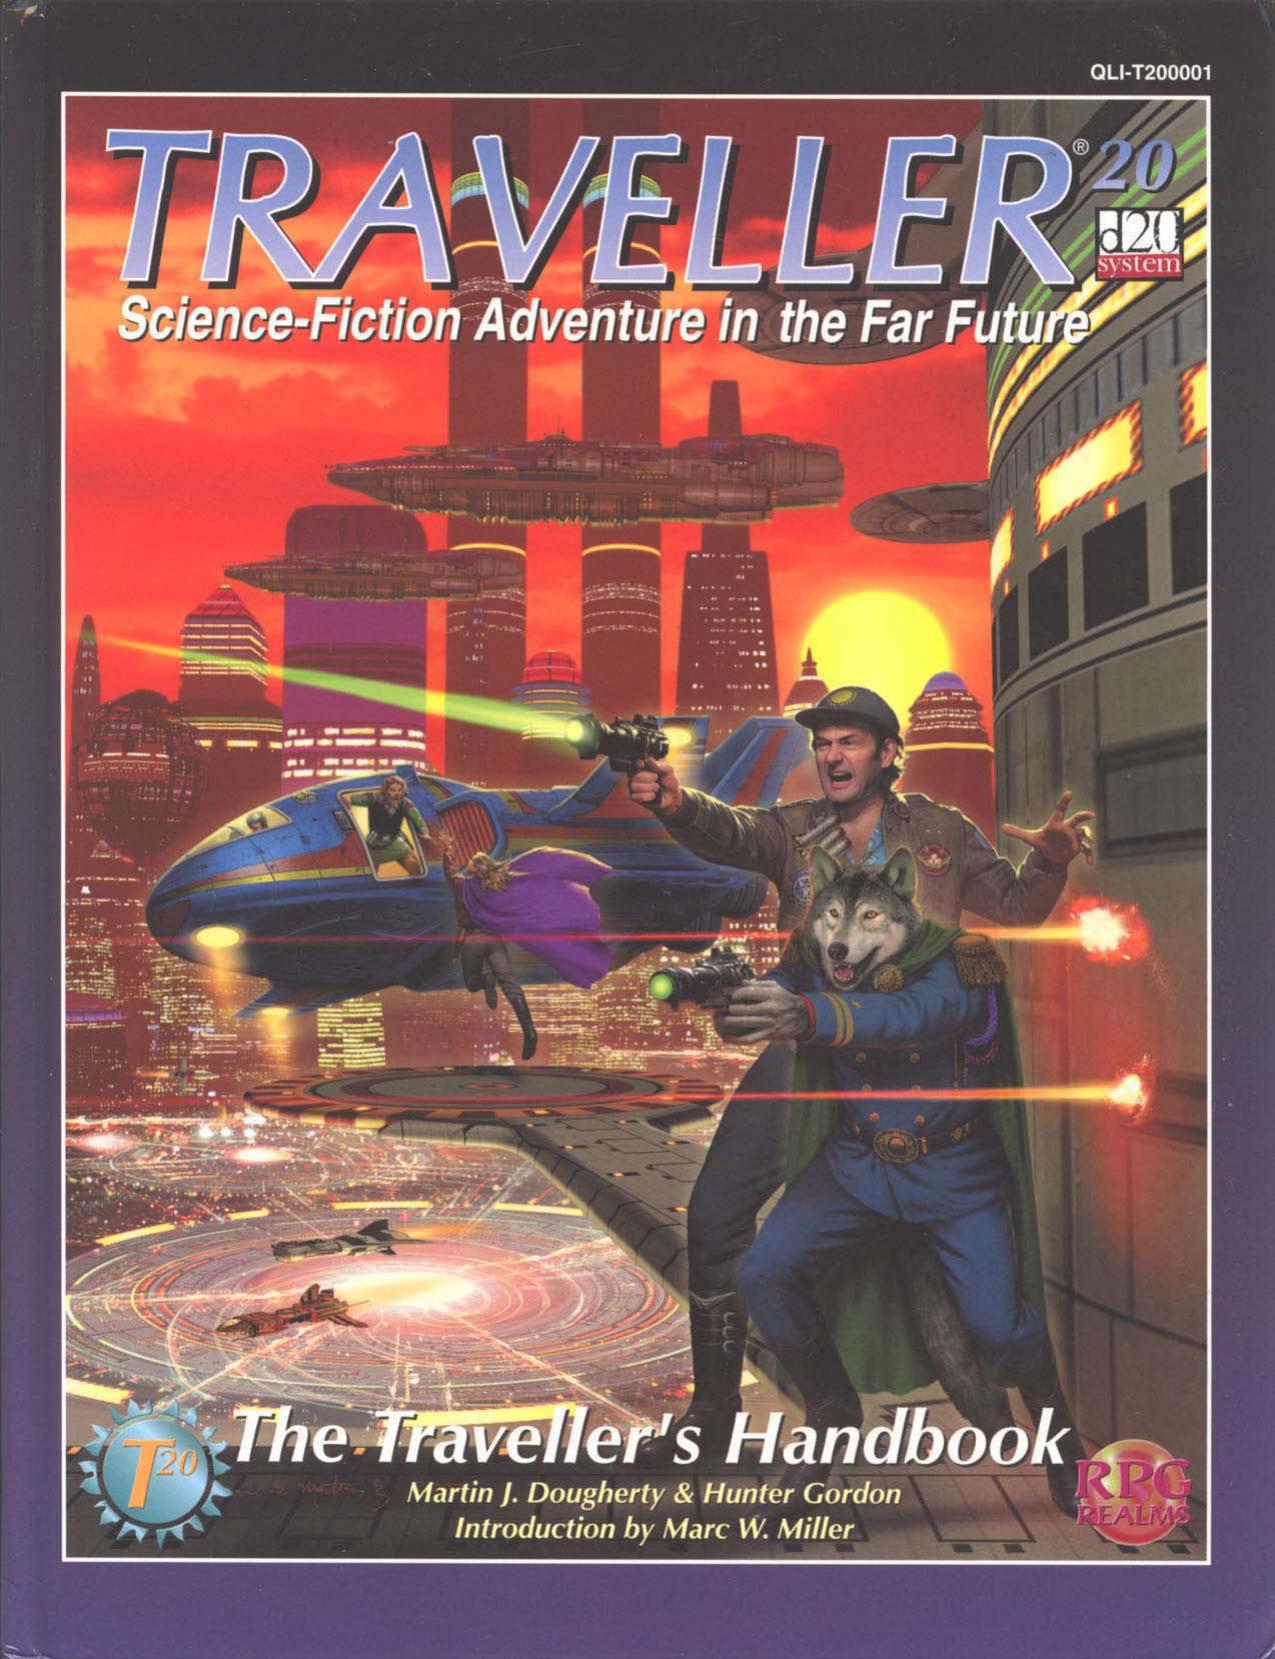 The Travellers Handbook